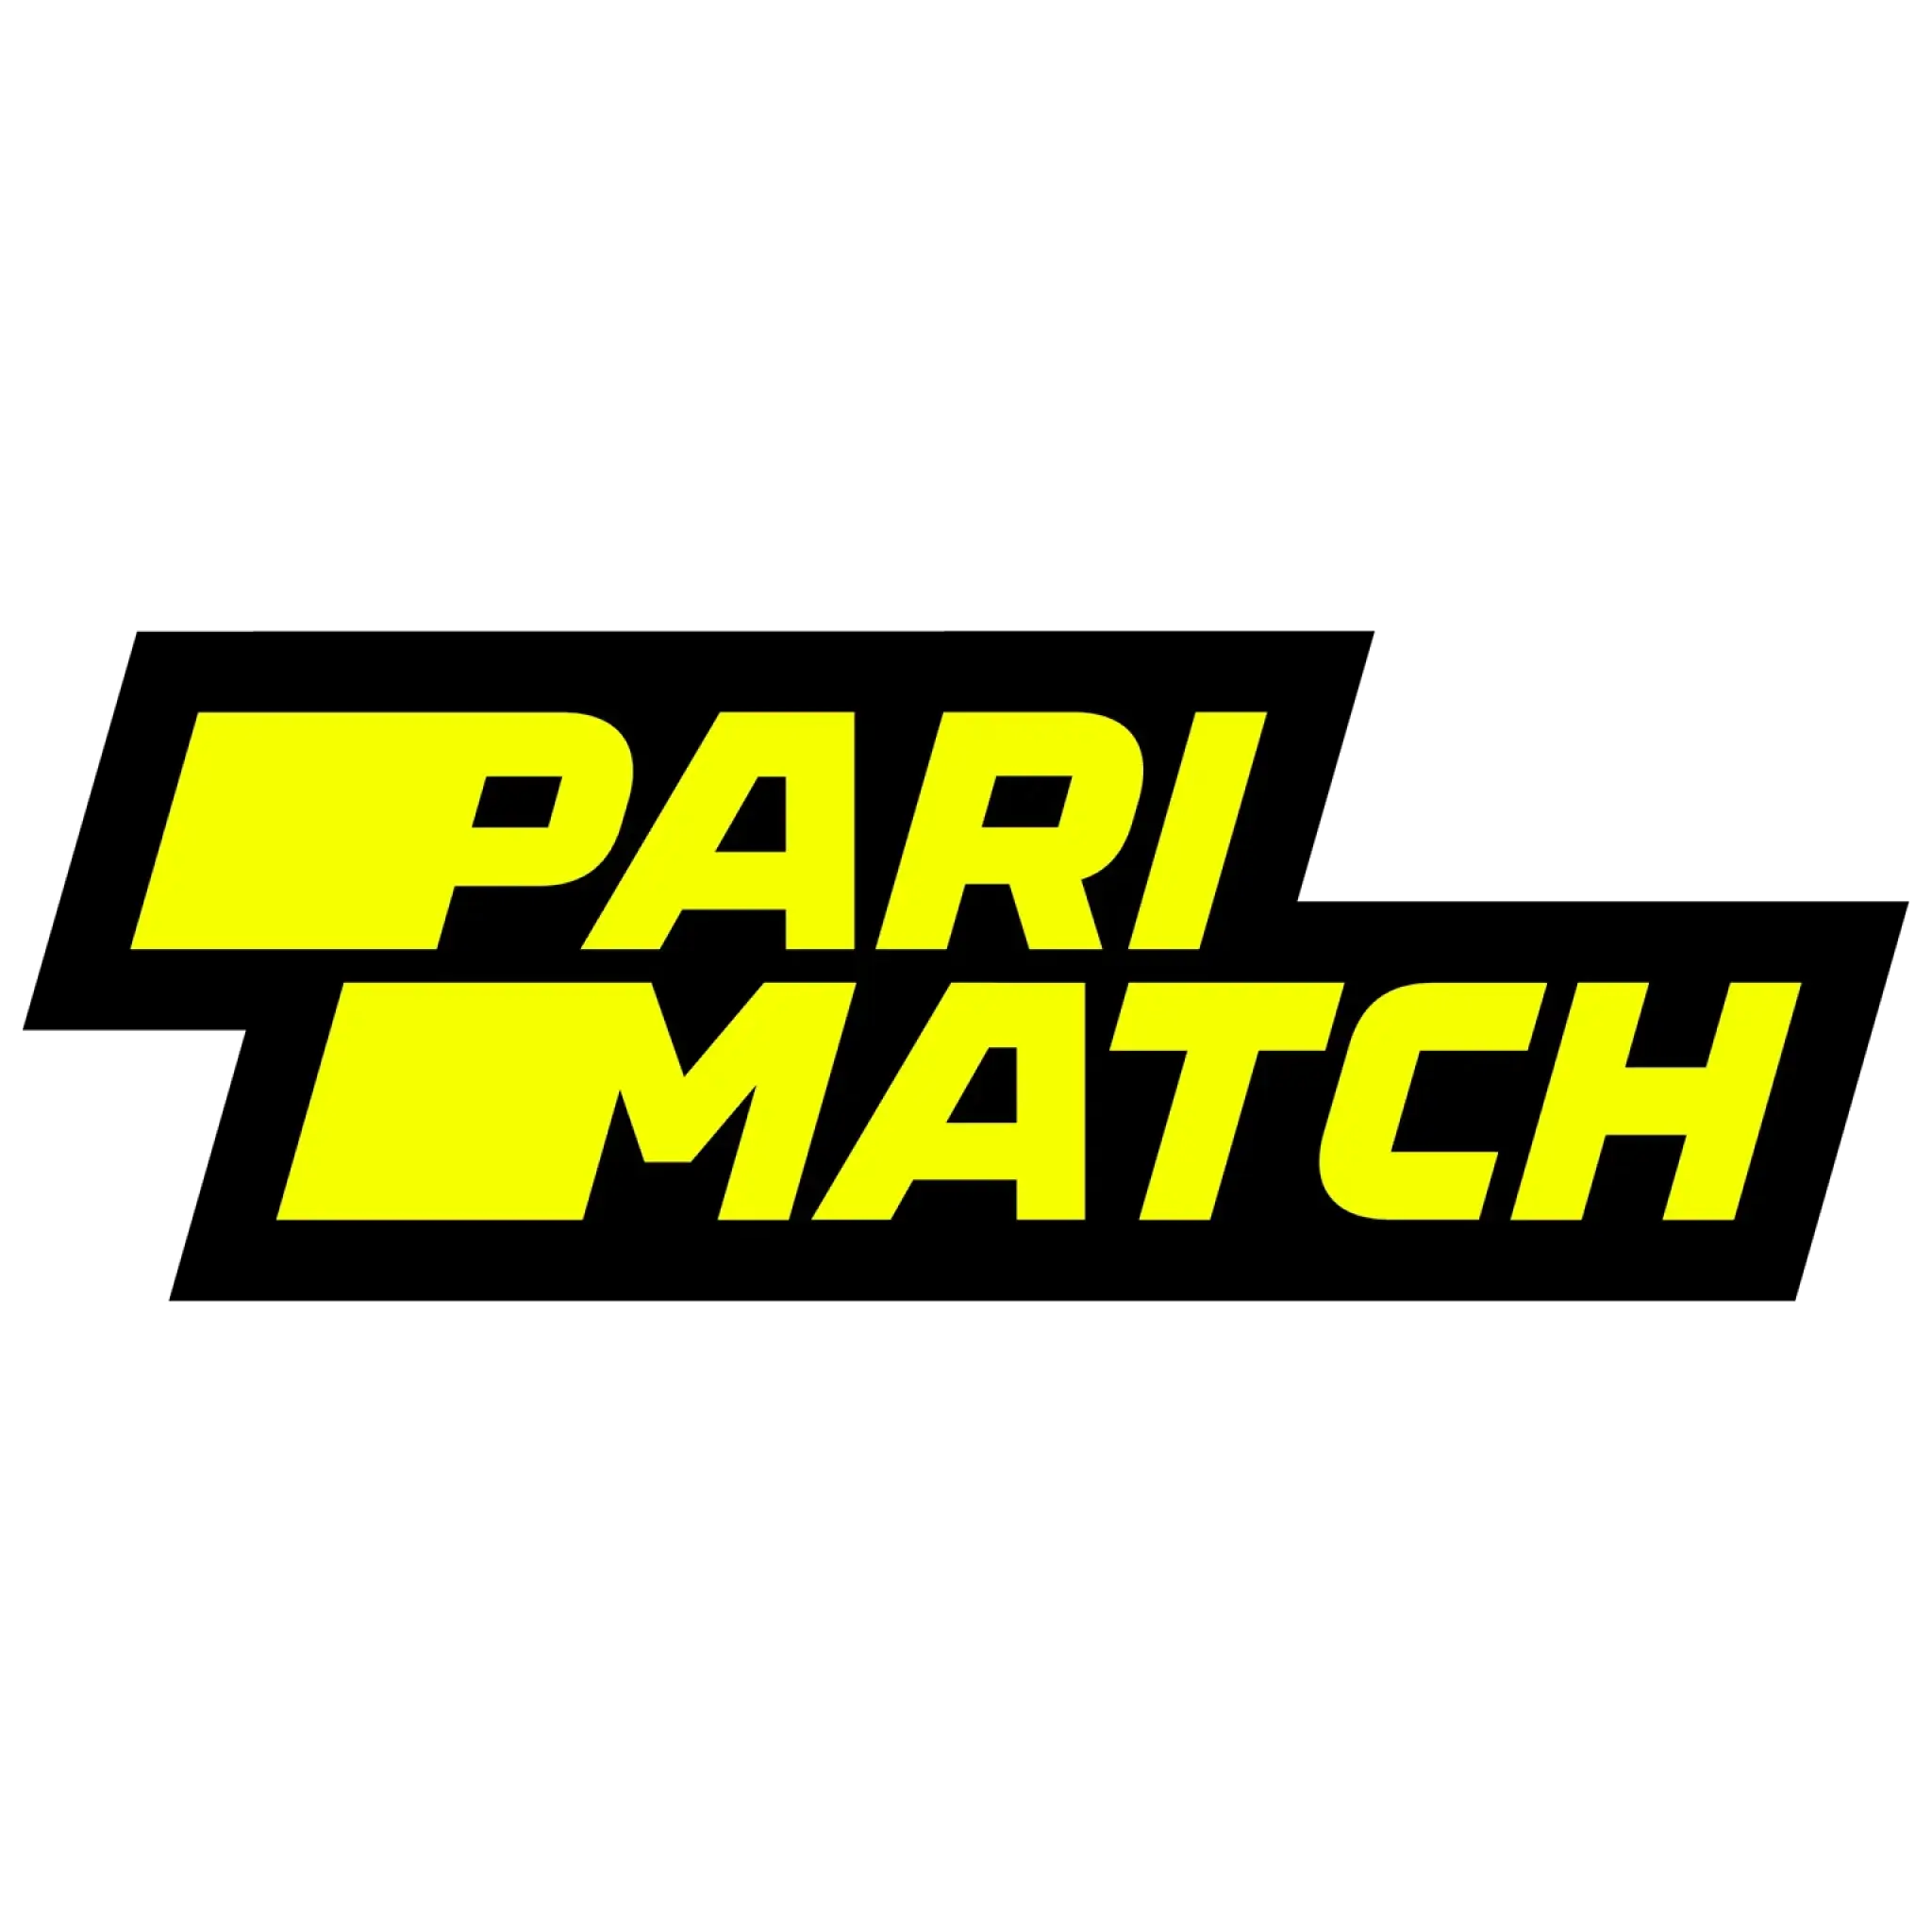 Parimatch app